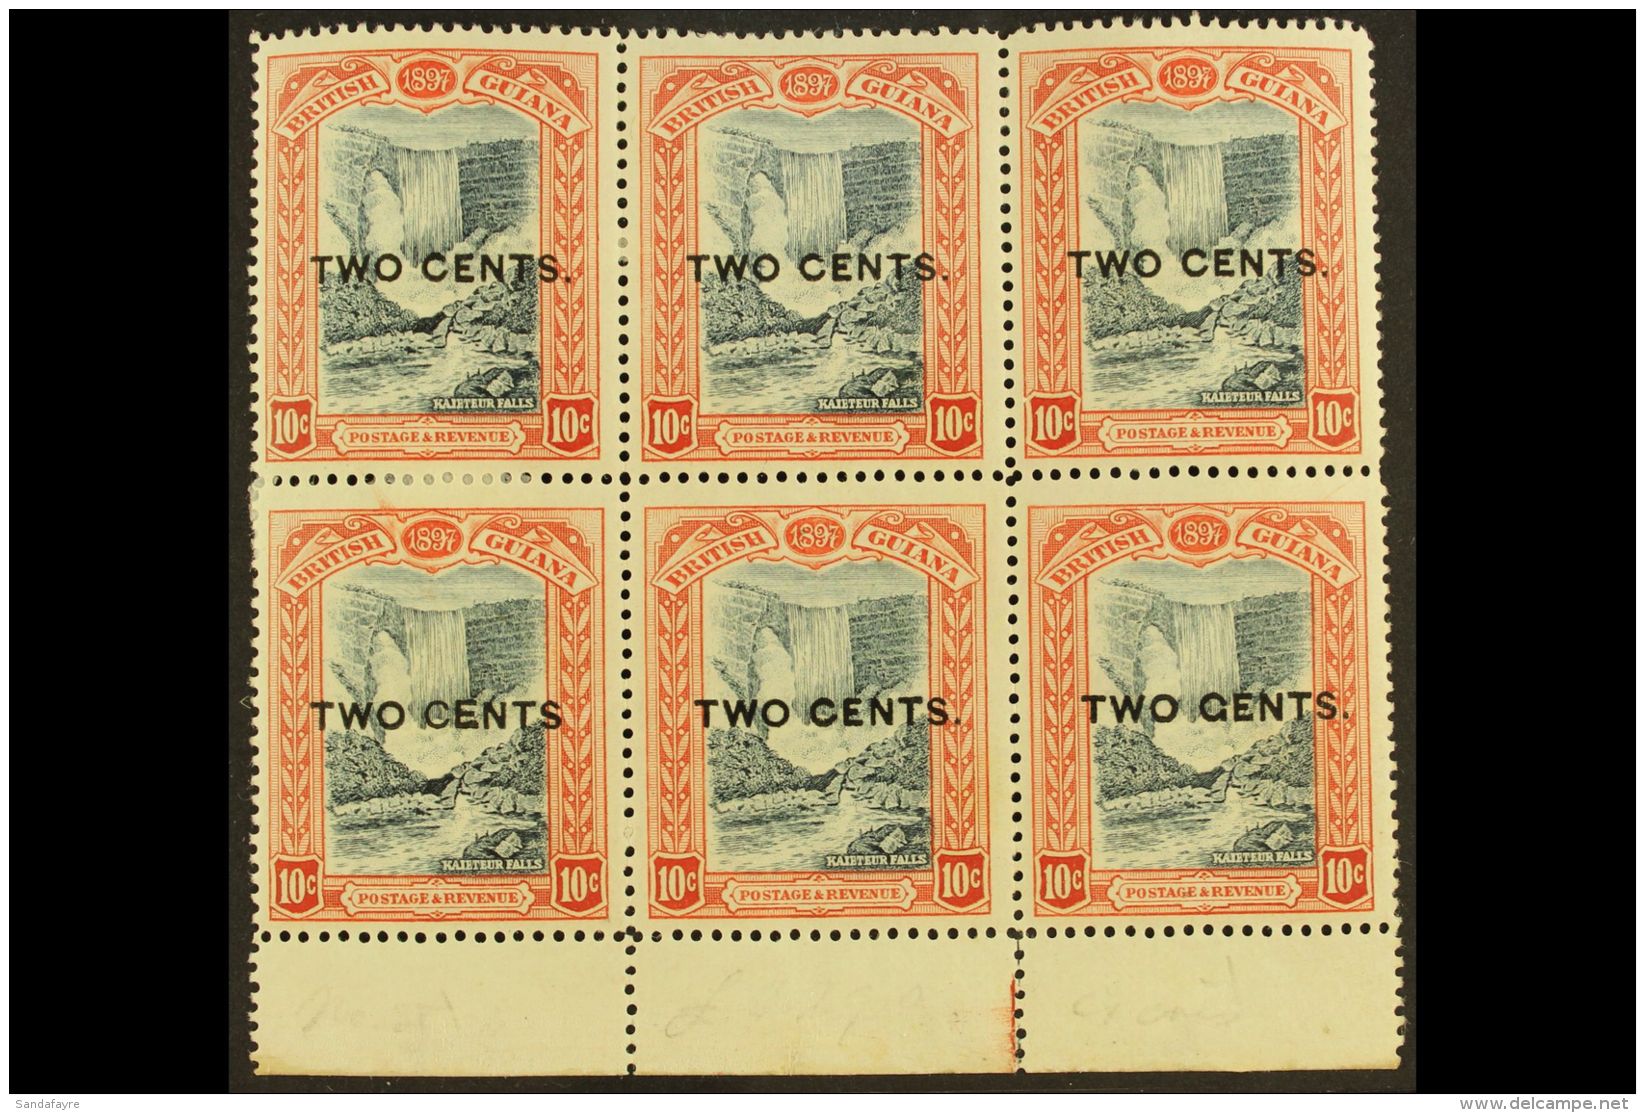 1899 POSITIONAL VARIETIES BLOCK 1899 2c On 10c Kaiteur Falls With NO STOP AFTER "CENTS" Variety, SG 223a, Plus... - Guyane Britannique (...-1966)